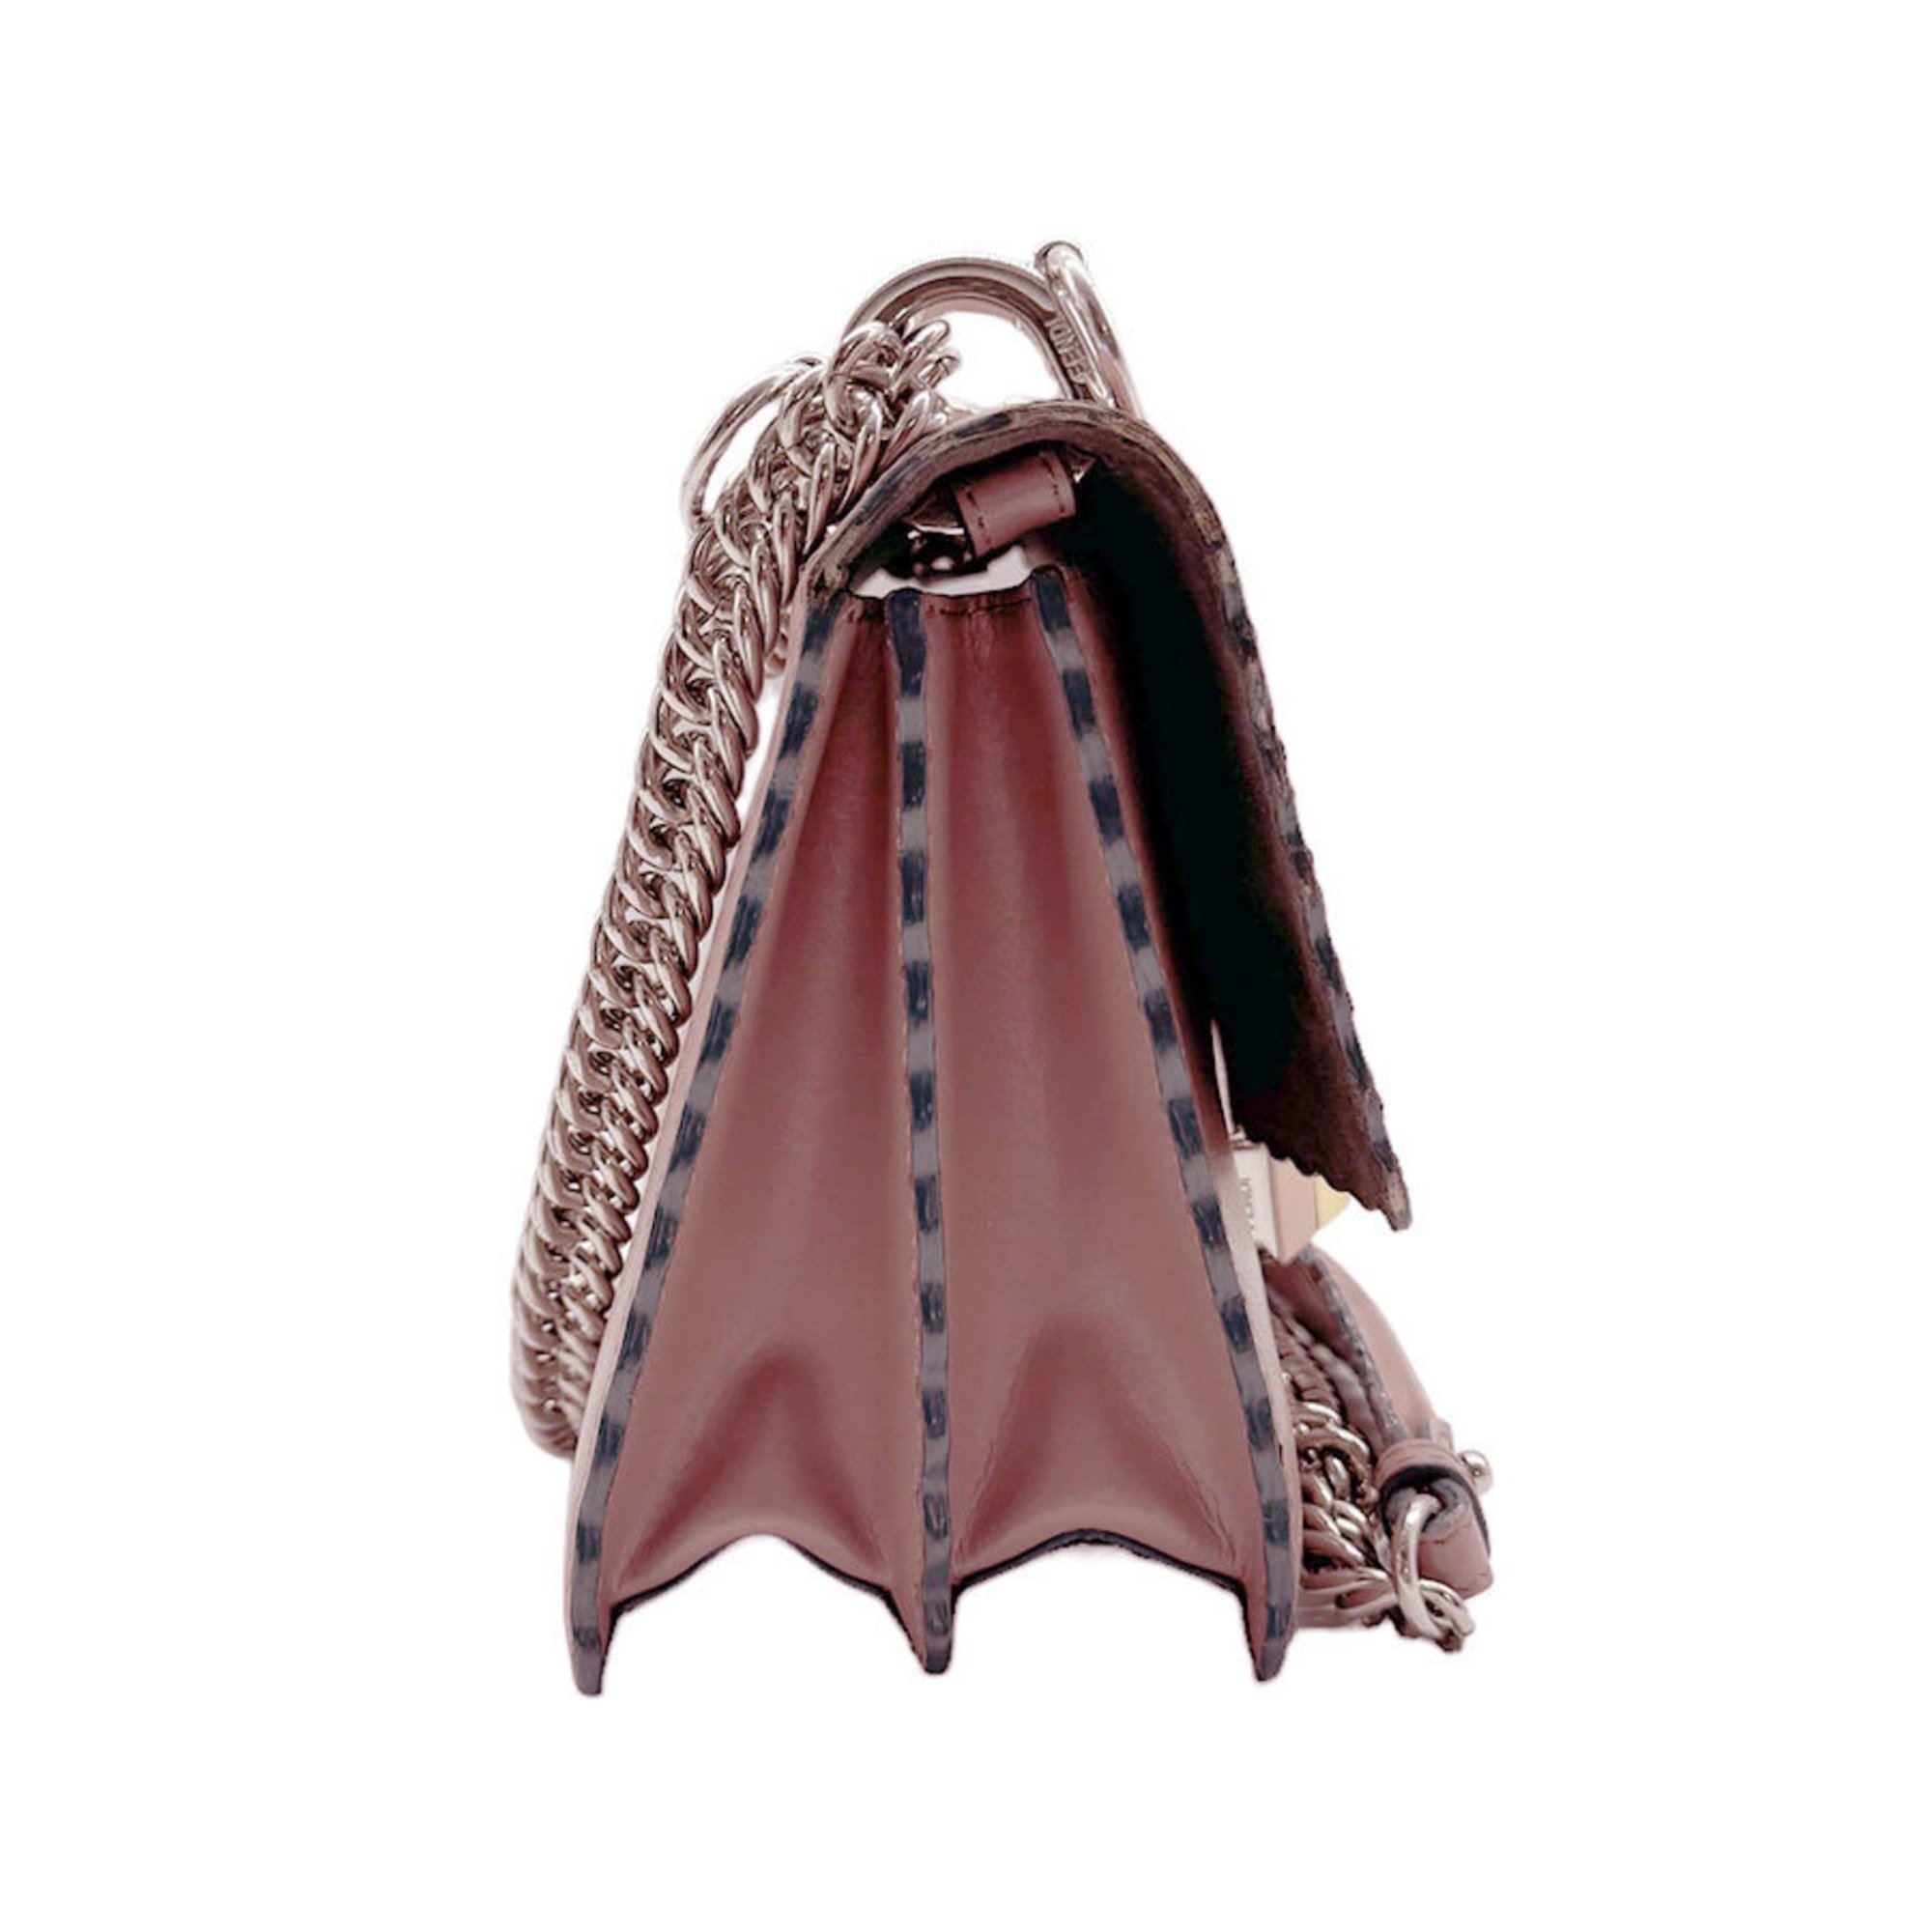 FENDI Shoulder Bag Leather Dusty Pink Women's 8M0381-OZC z0516